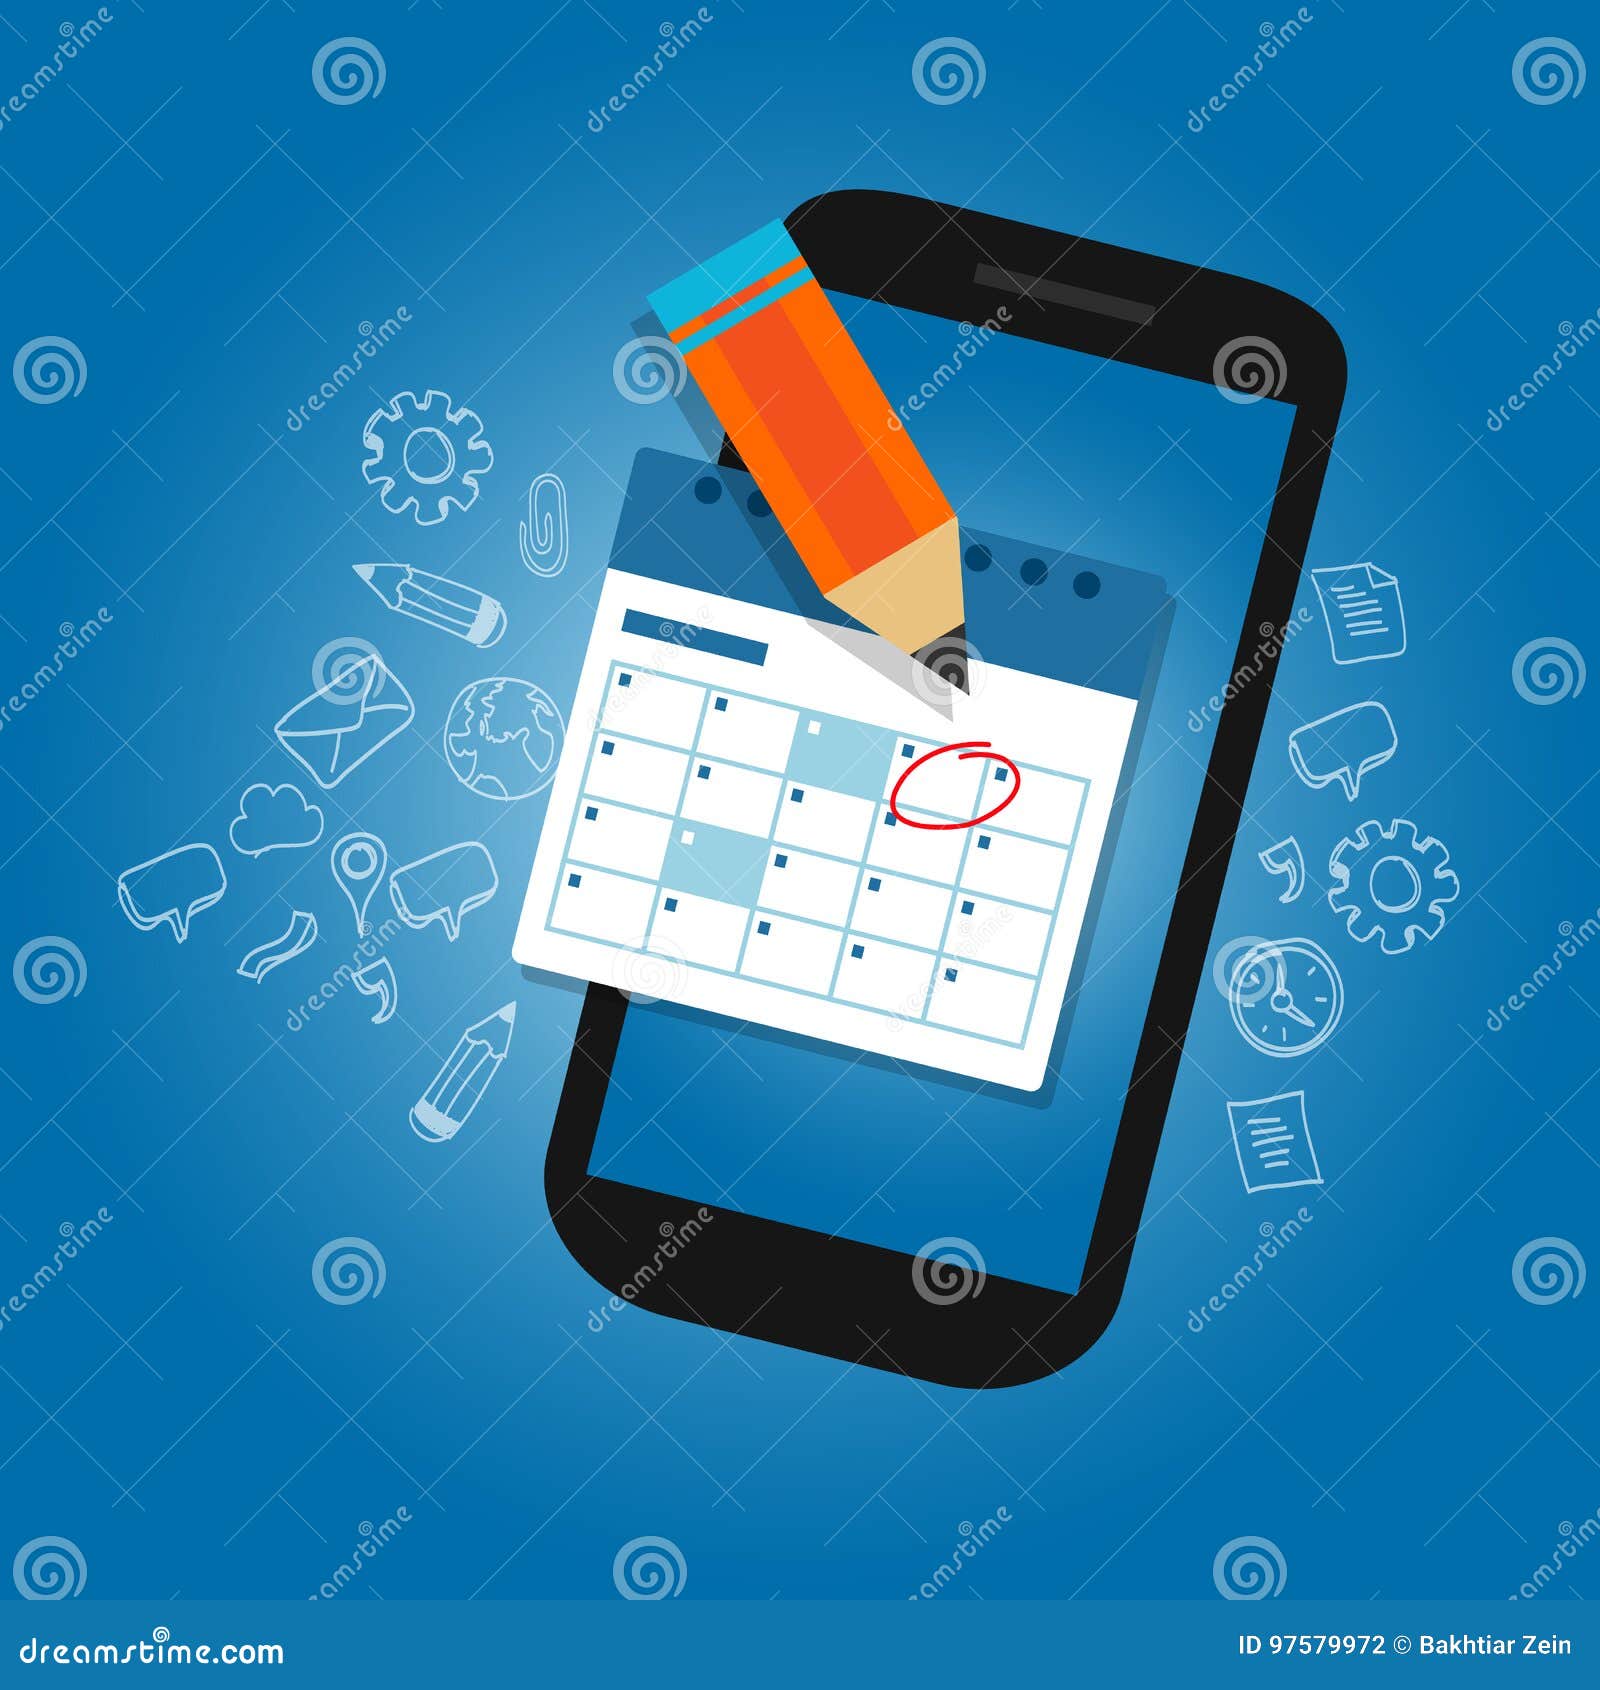 mark calendar schedule on mobile smart-phone device important dates reminder time organizer plan